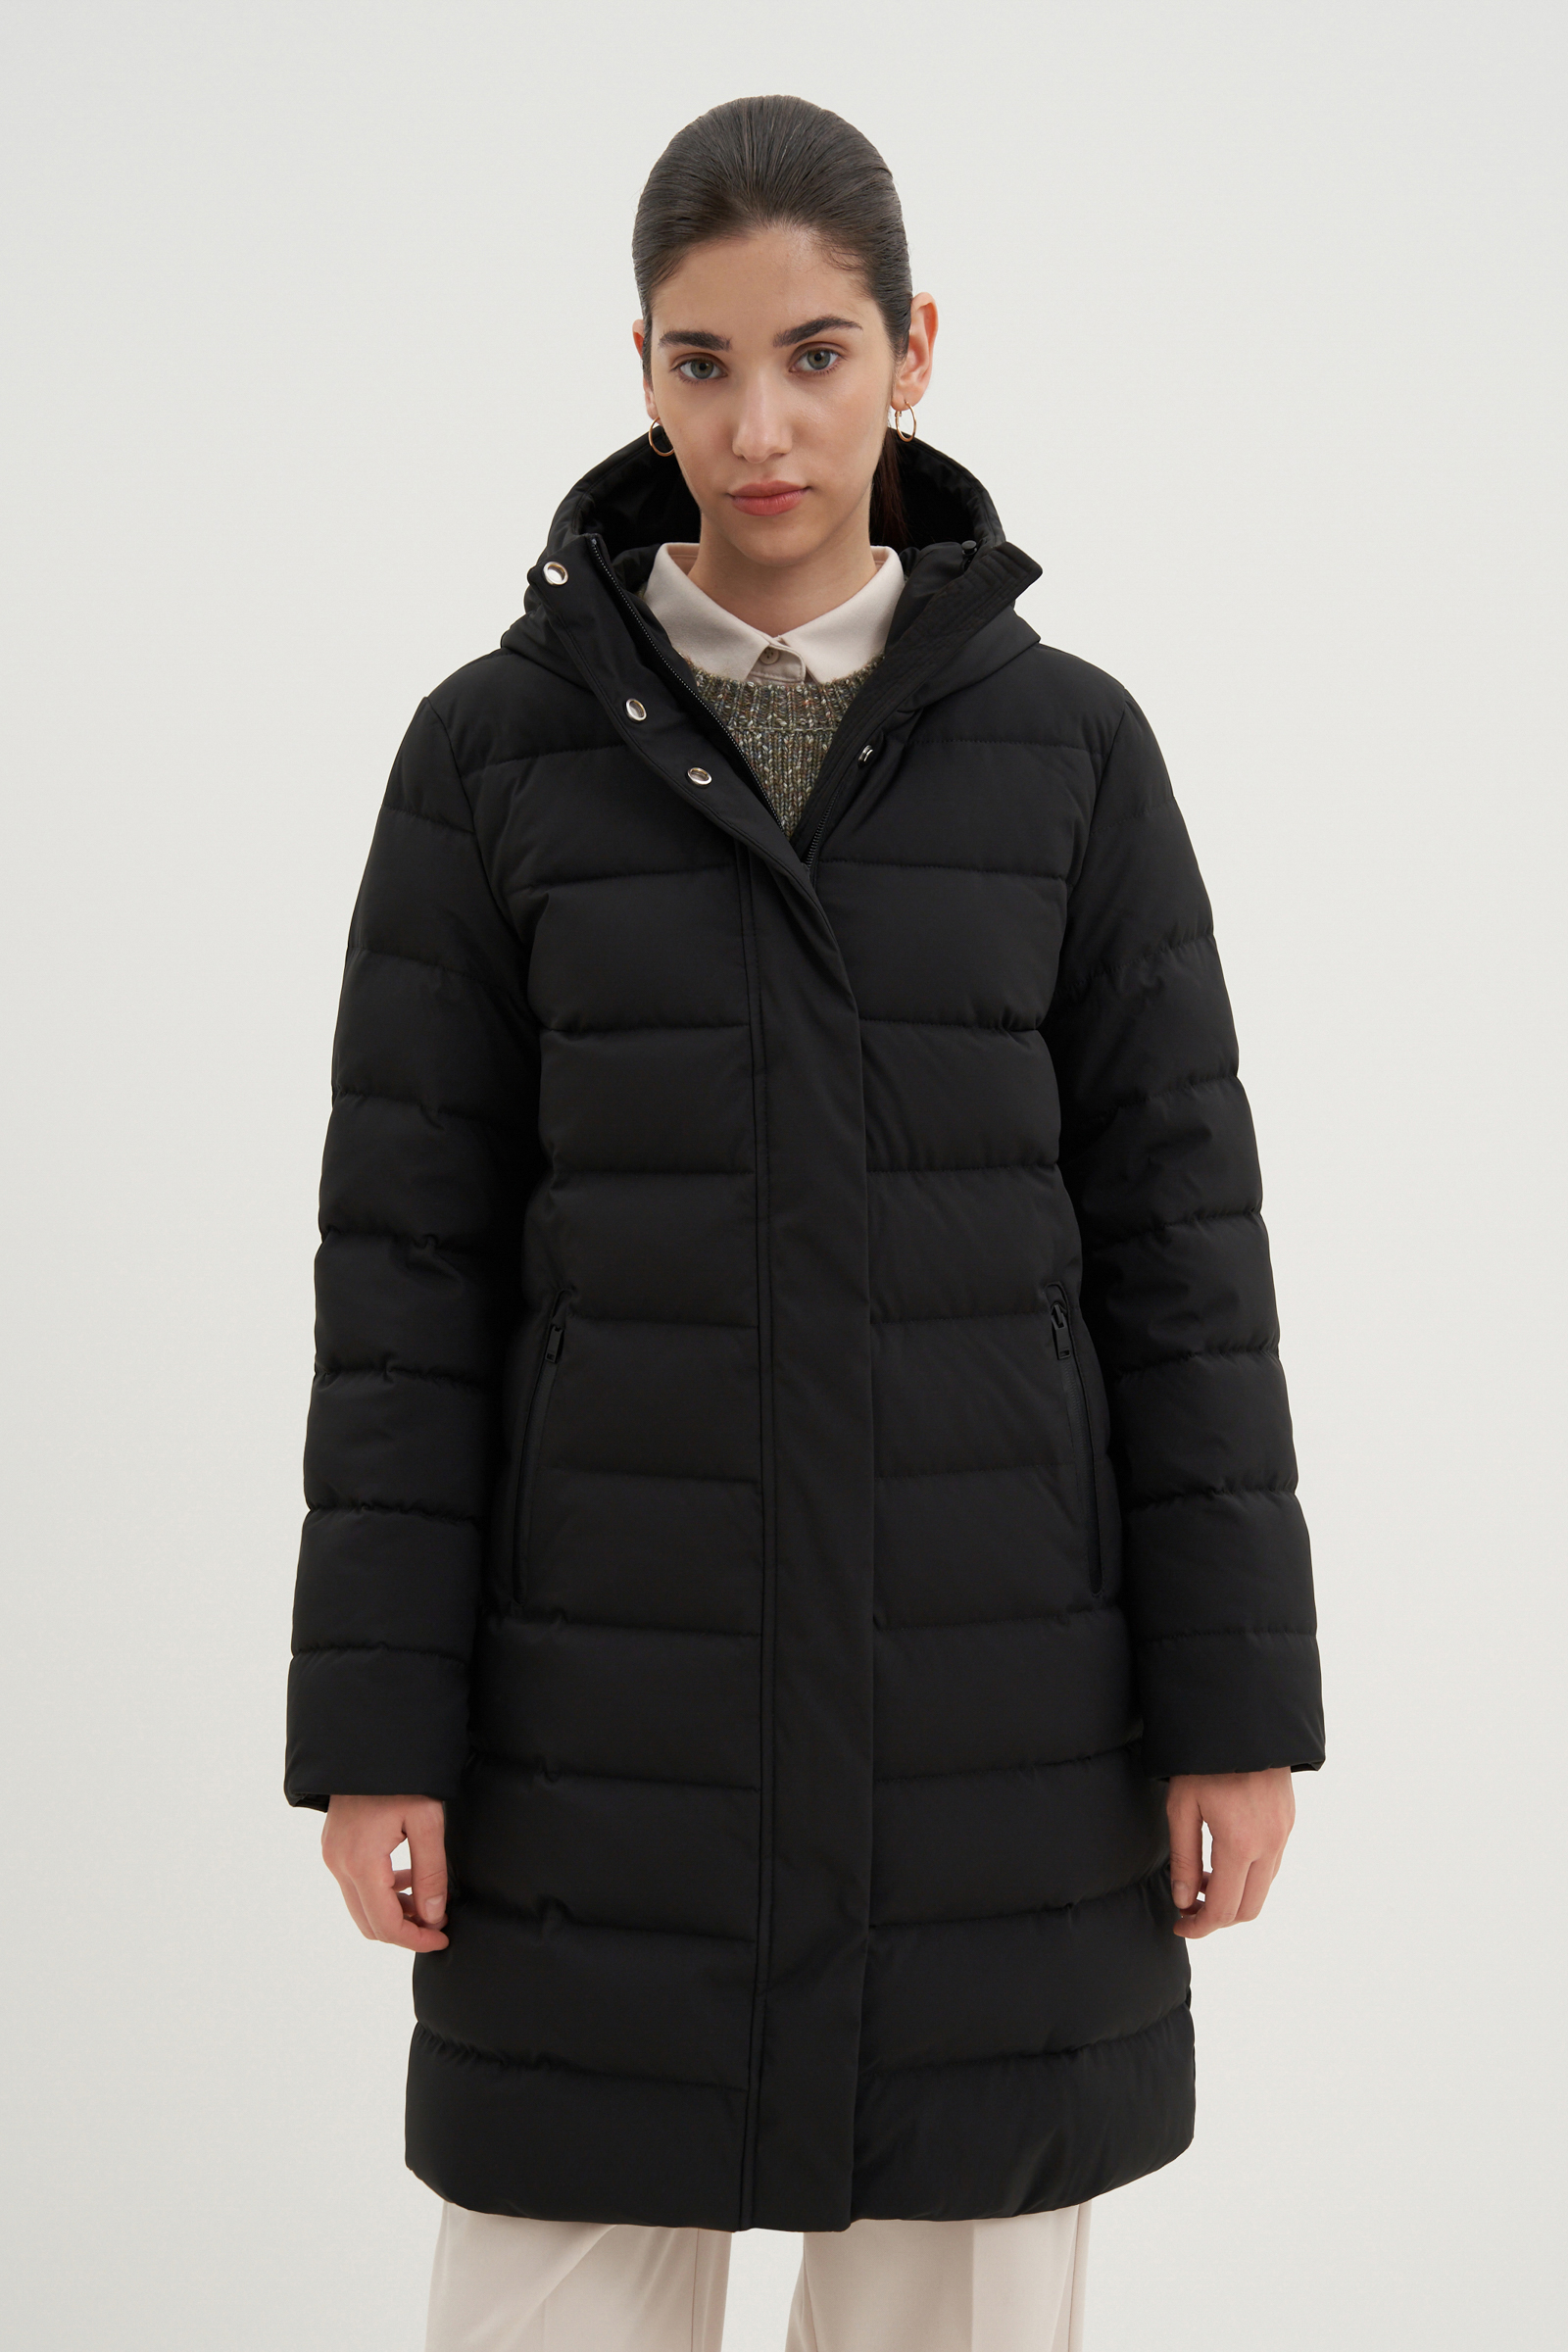 Пуховик-пальто женский Finn Flare FWB110122 черный XL